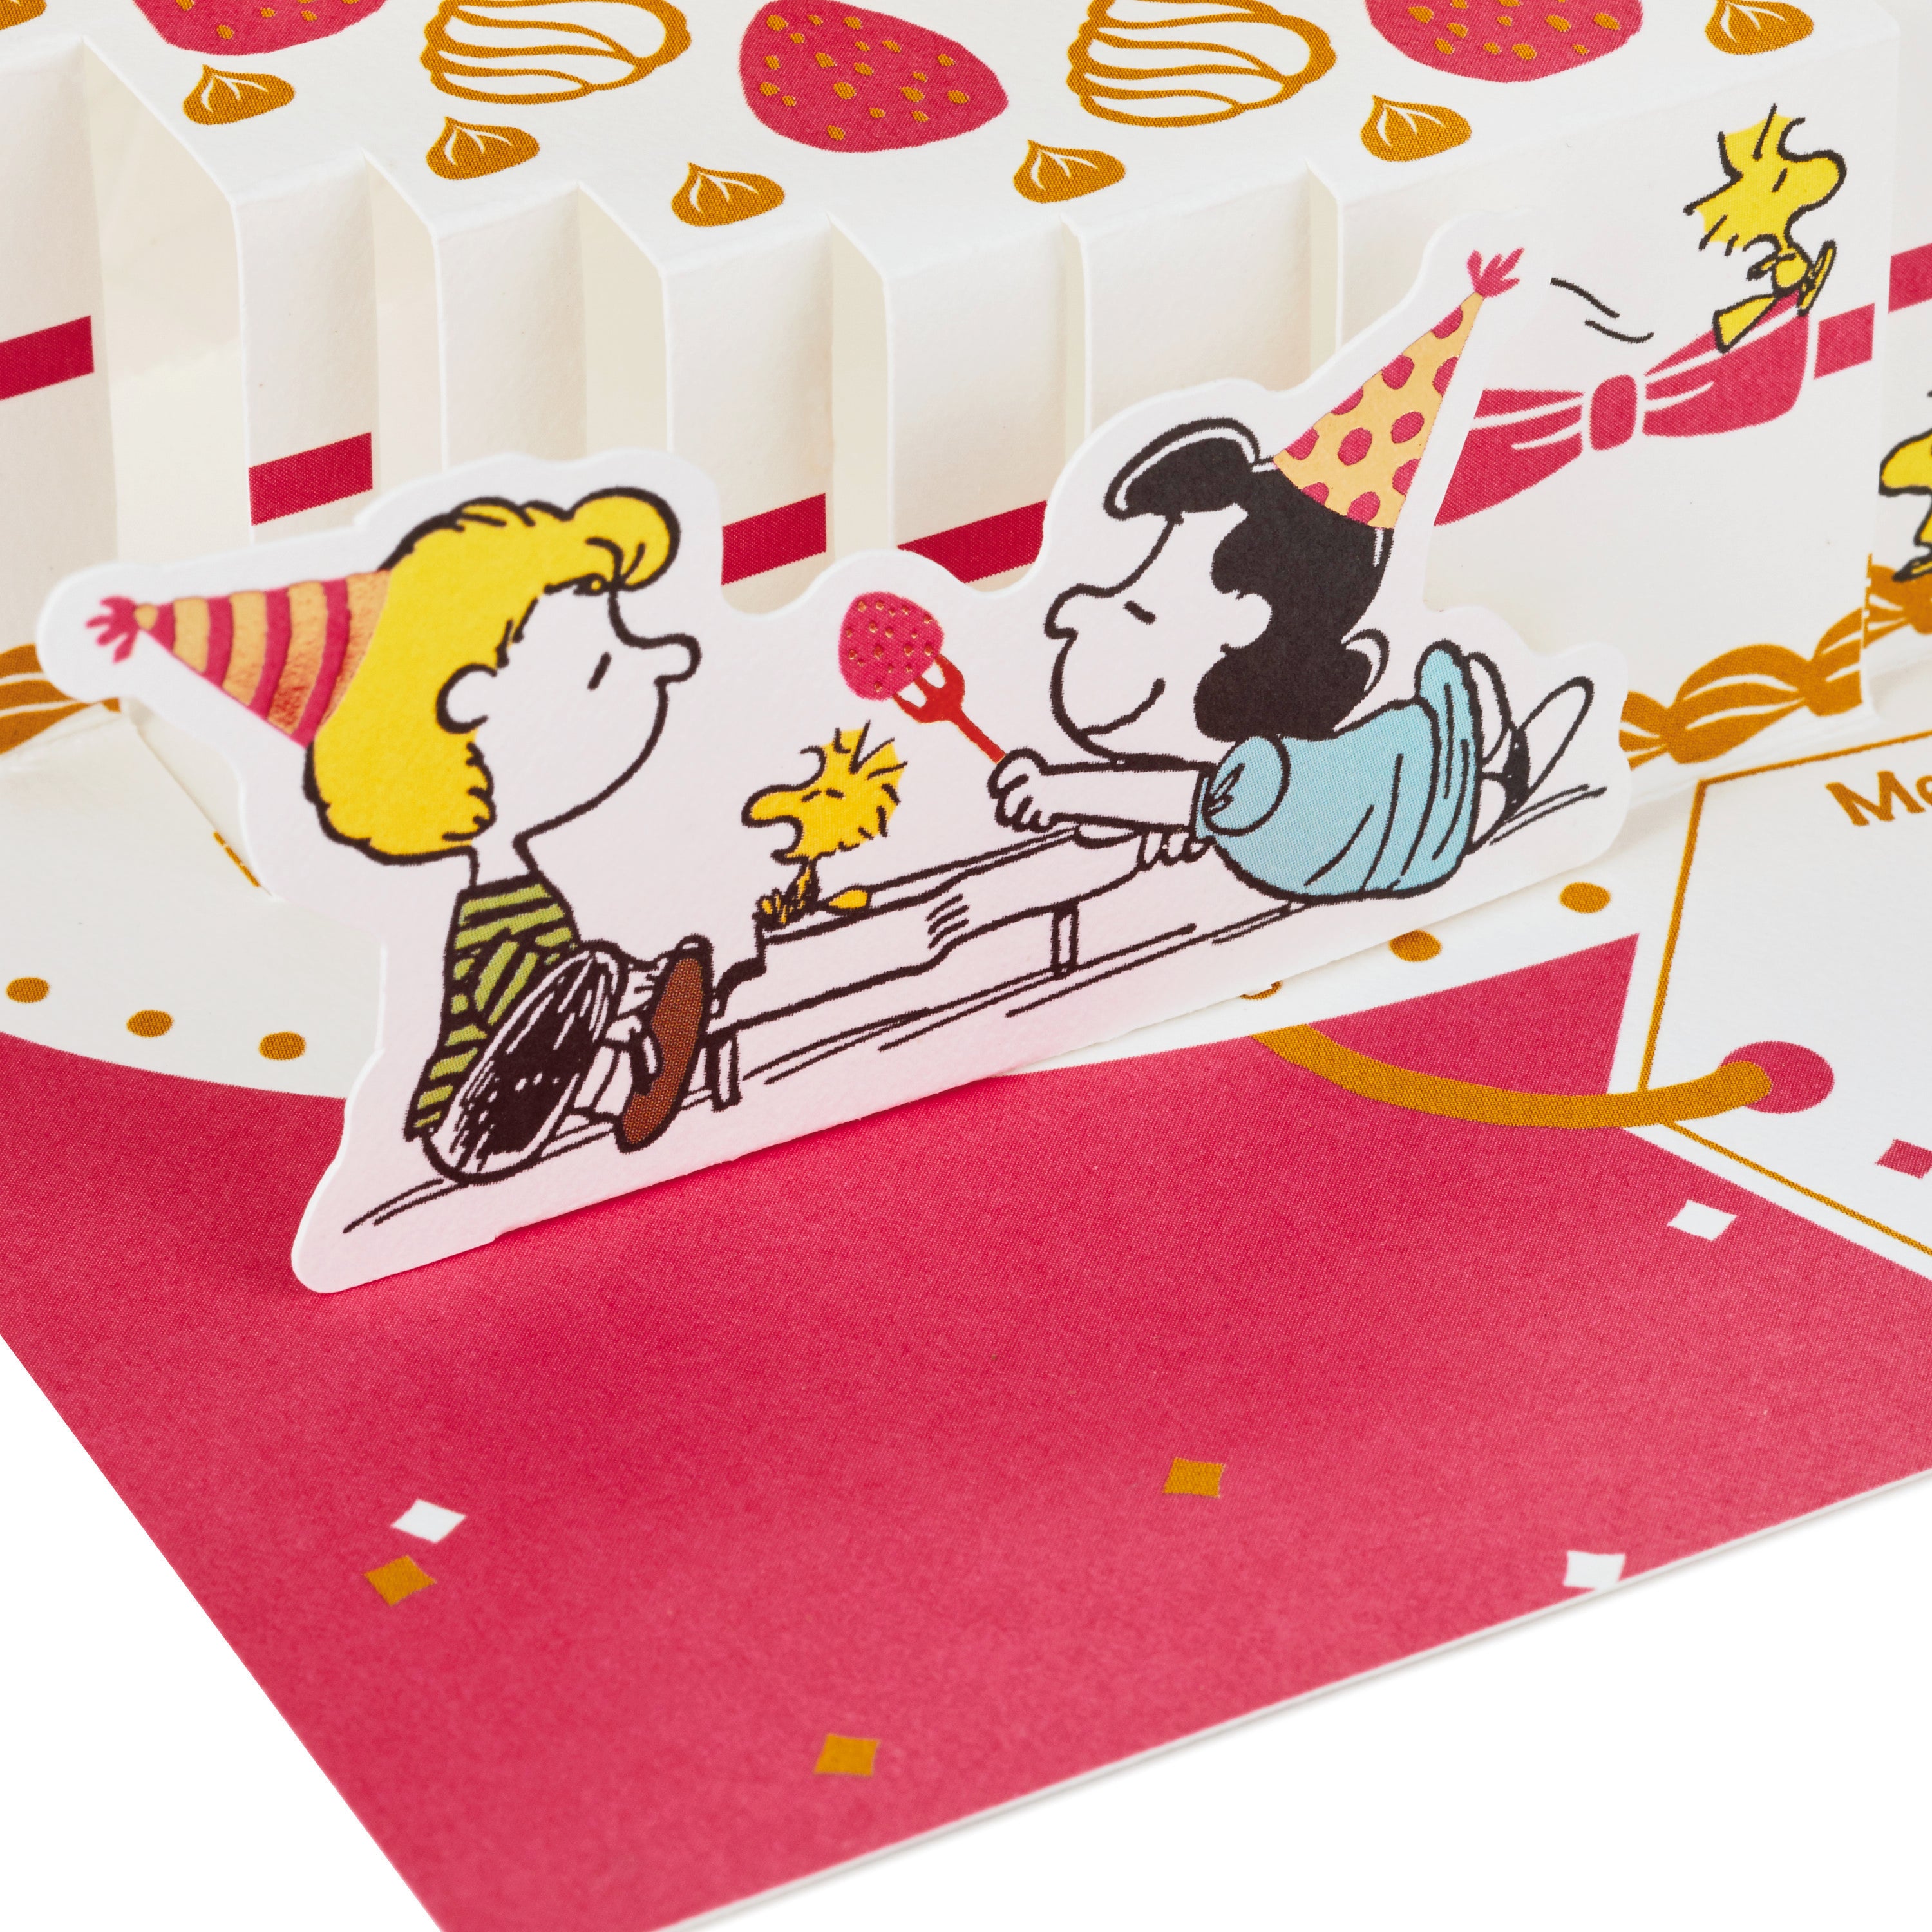 Pop Up Peanuts Birthday Card (Peanuts and Snoopy Cake)